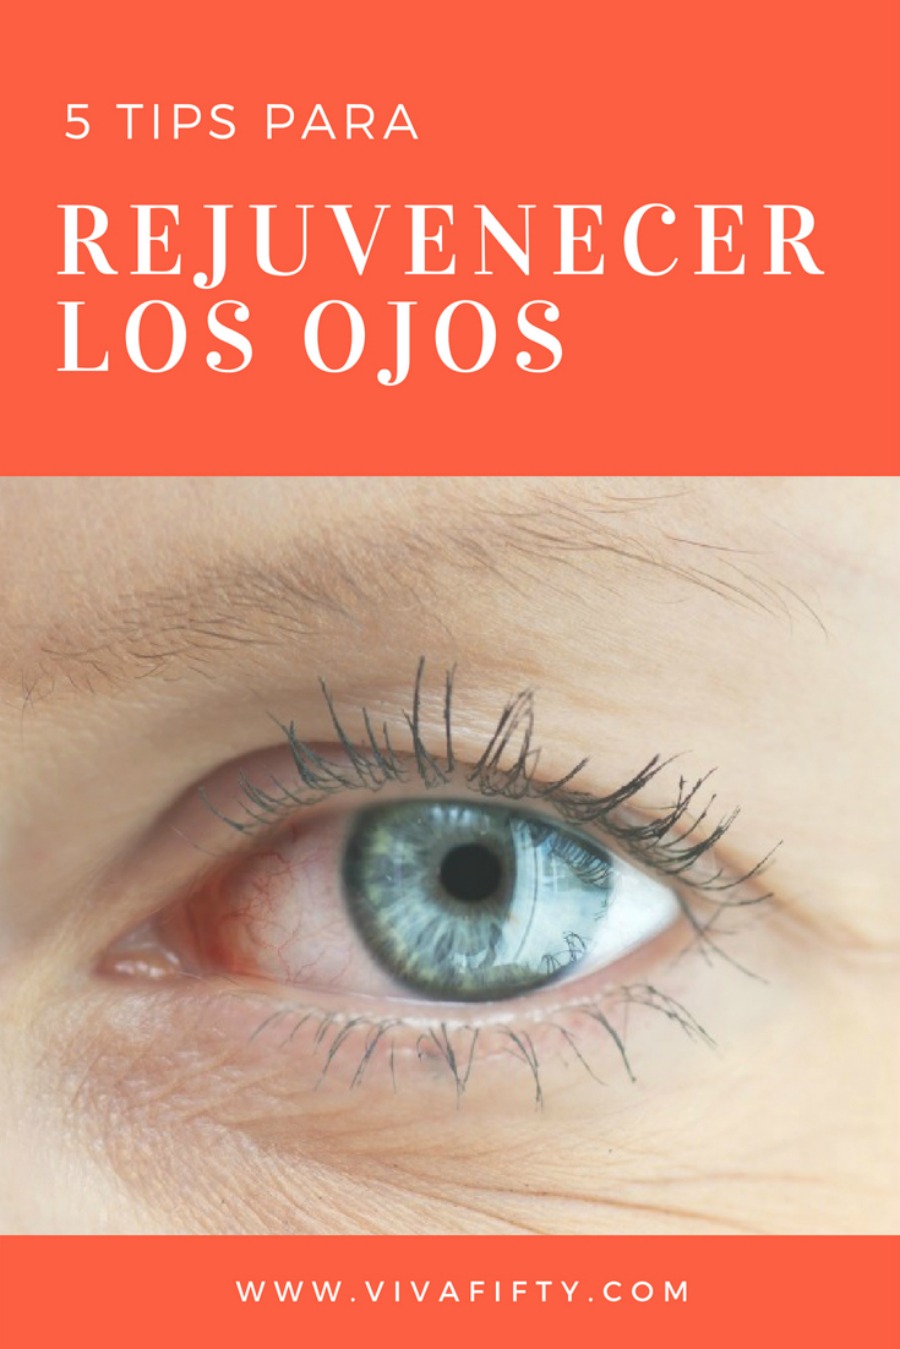 5 Tips para rejuvenecer los ojos